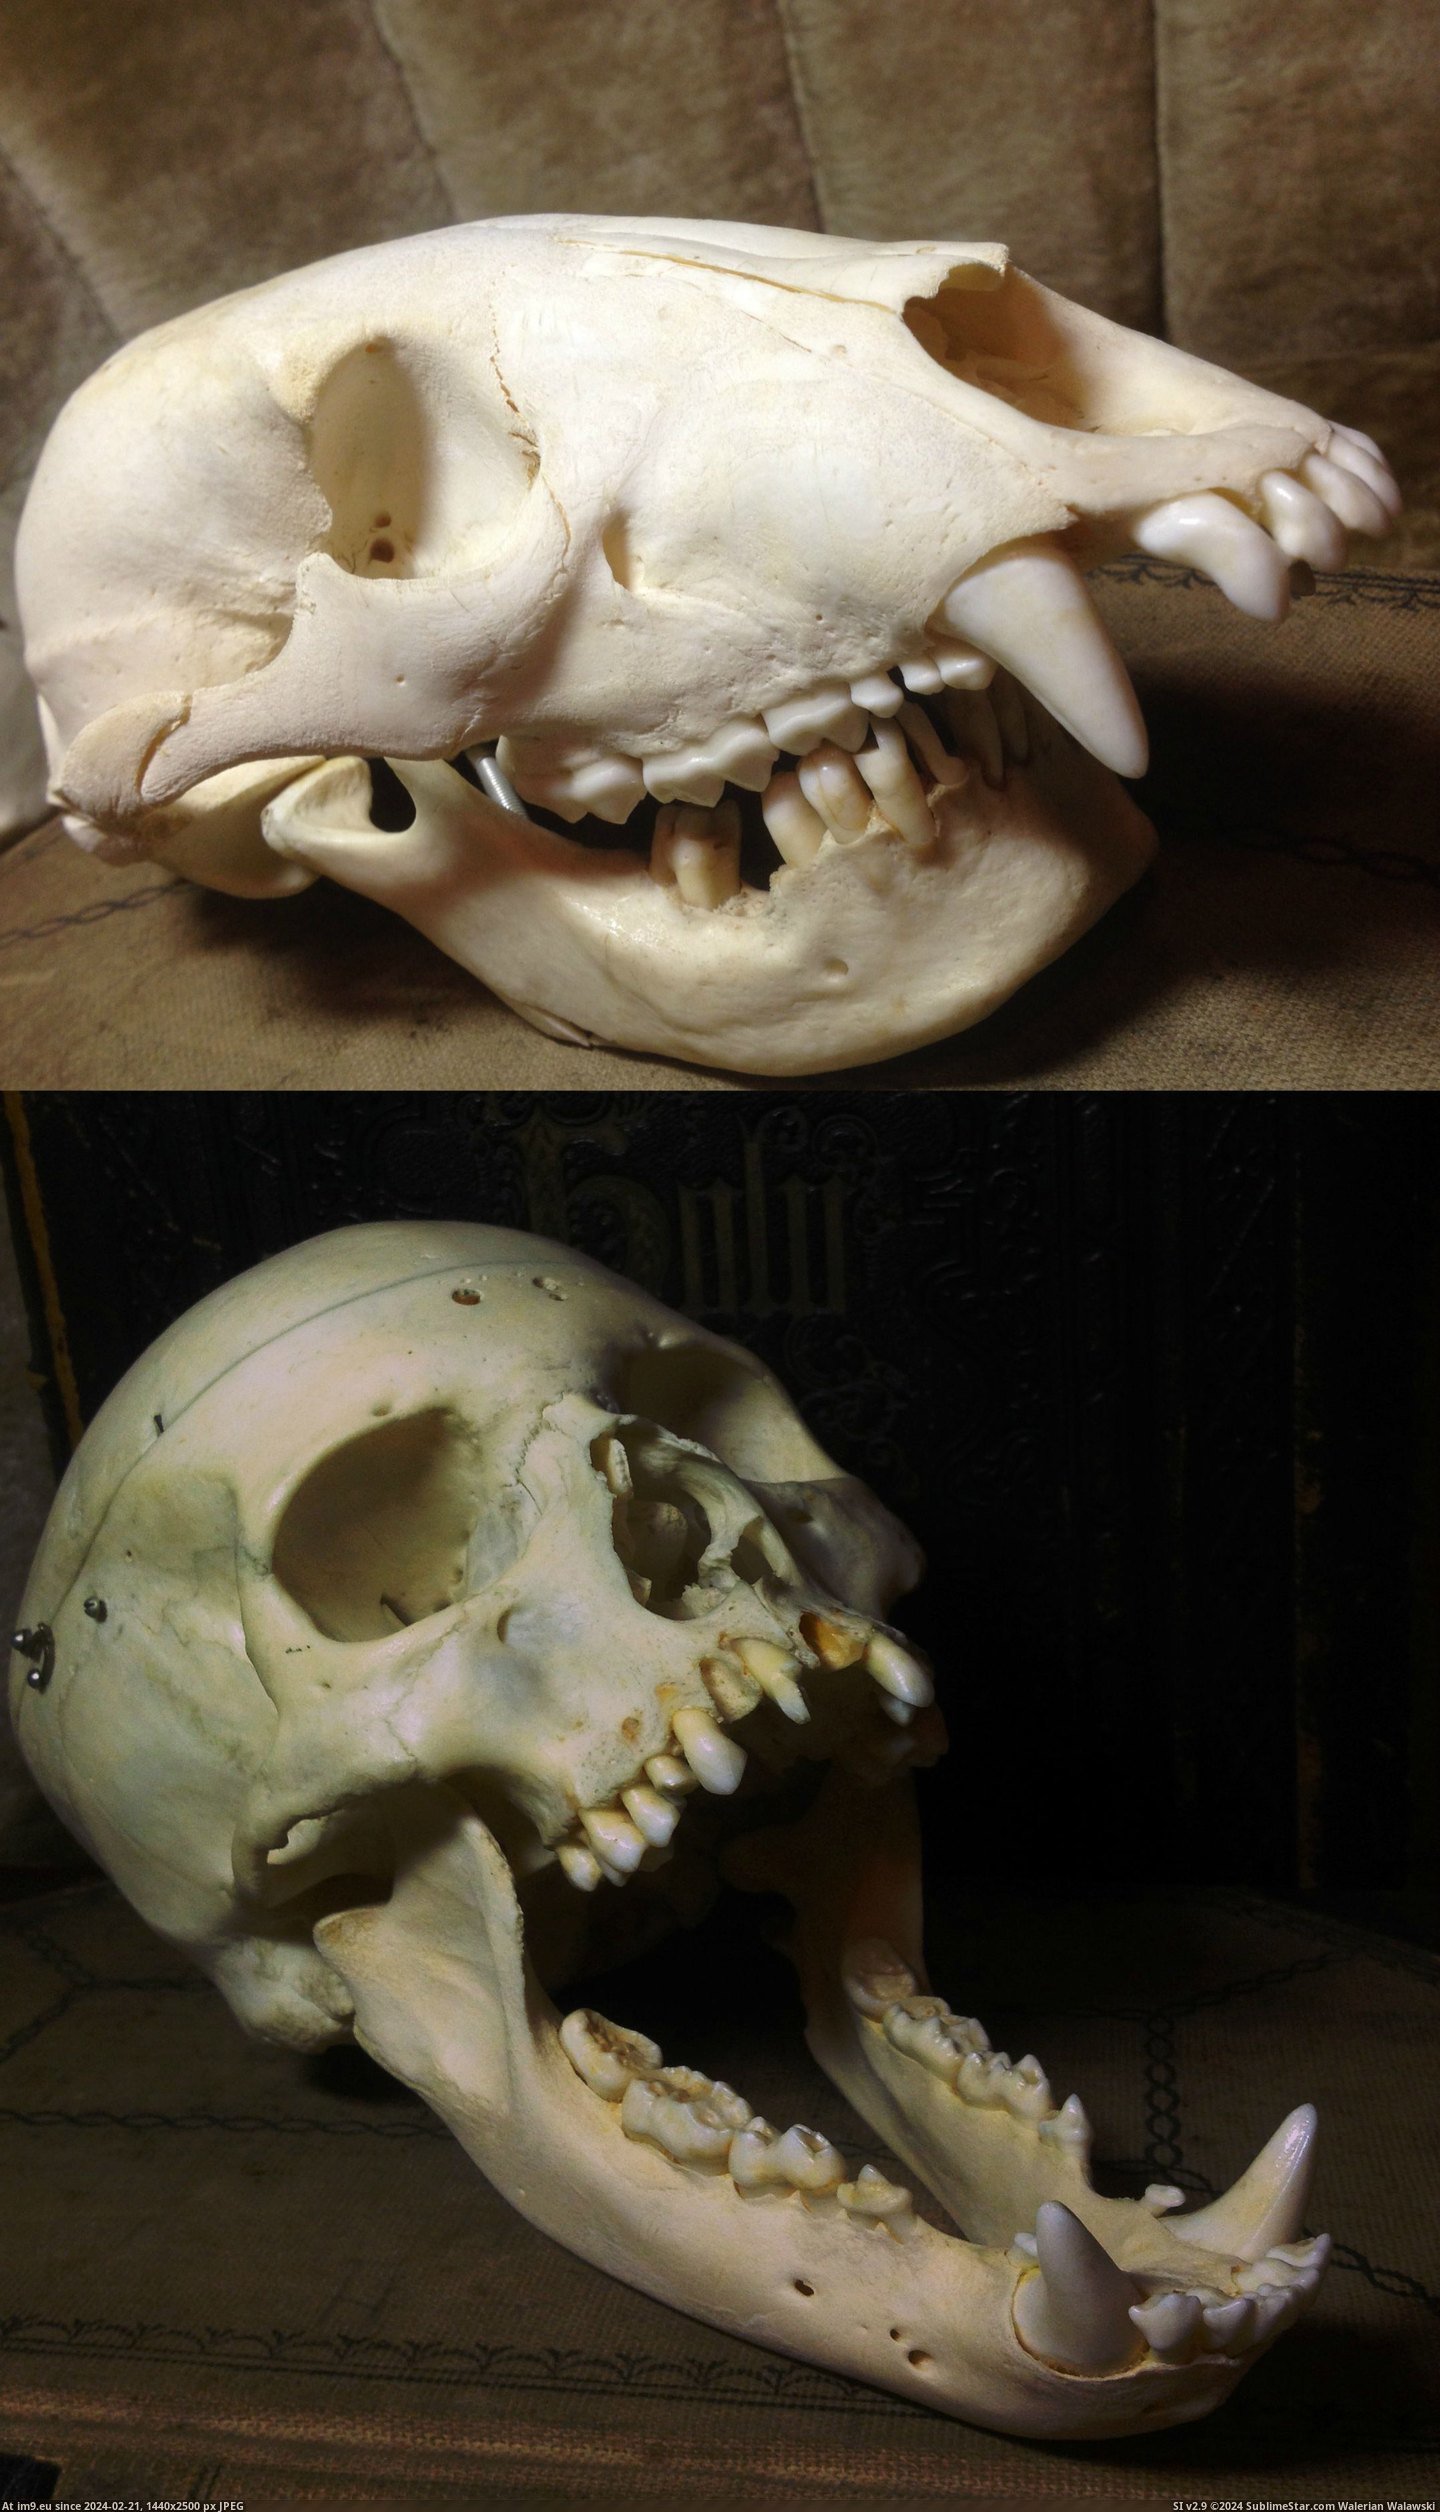 #Wtf #Human #Swap #Bear #Skull [Wtf] Human & Bear Skull Swap Pic. (Image of album My r/WTF favs))